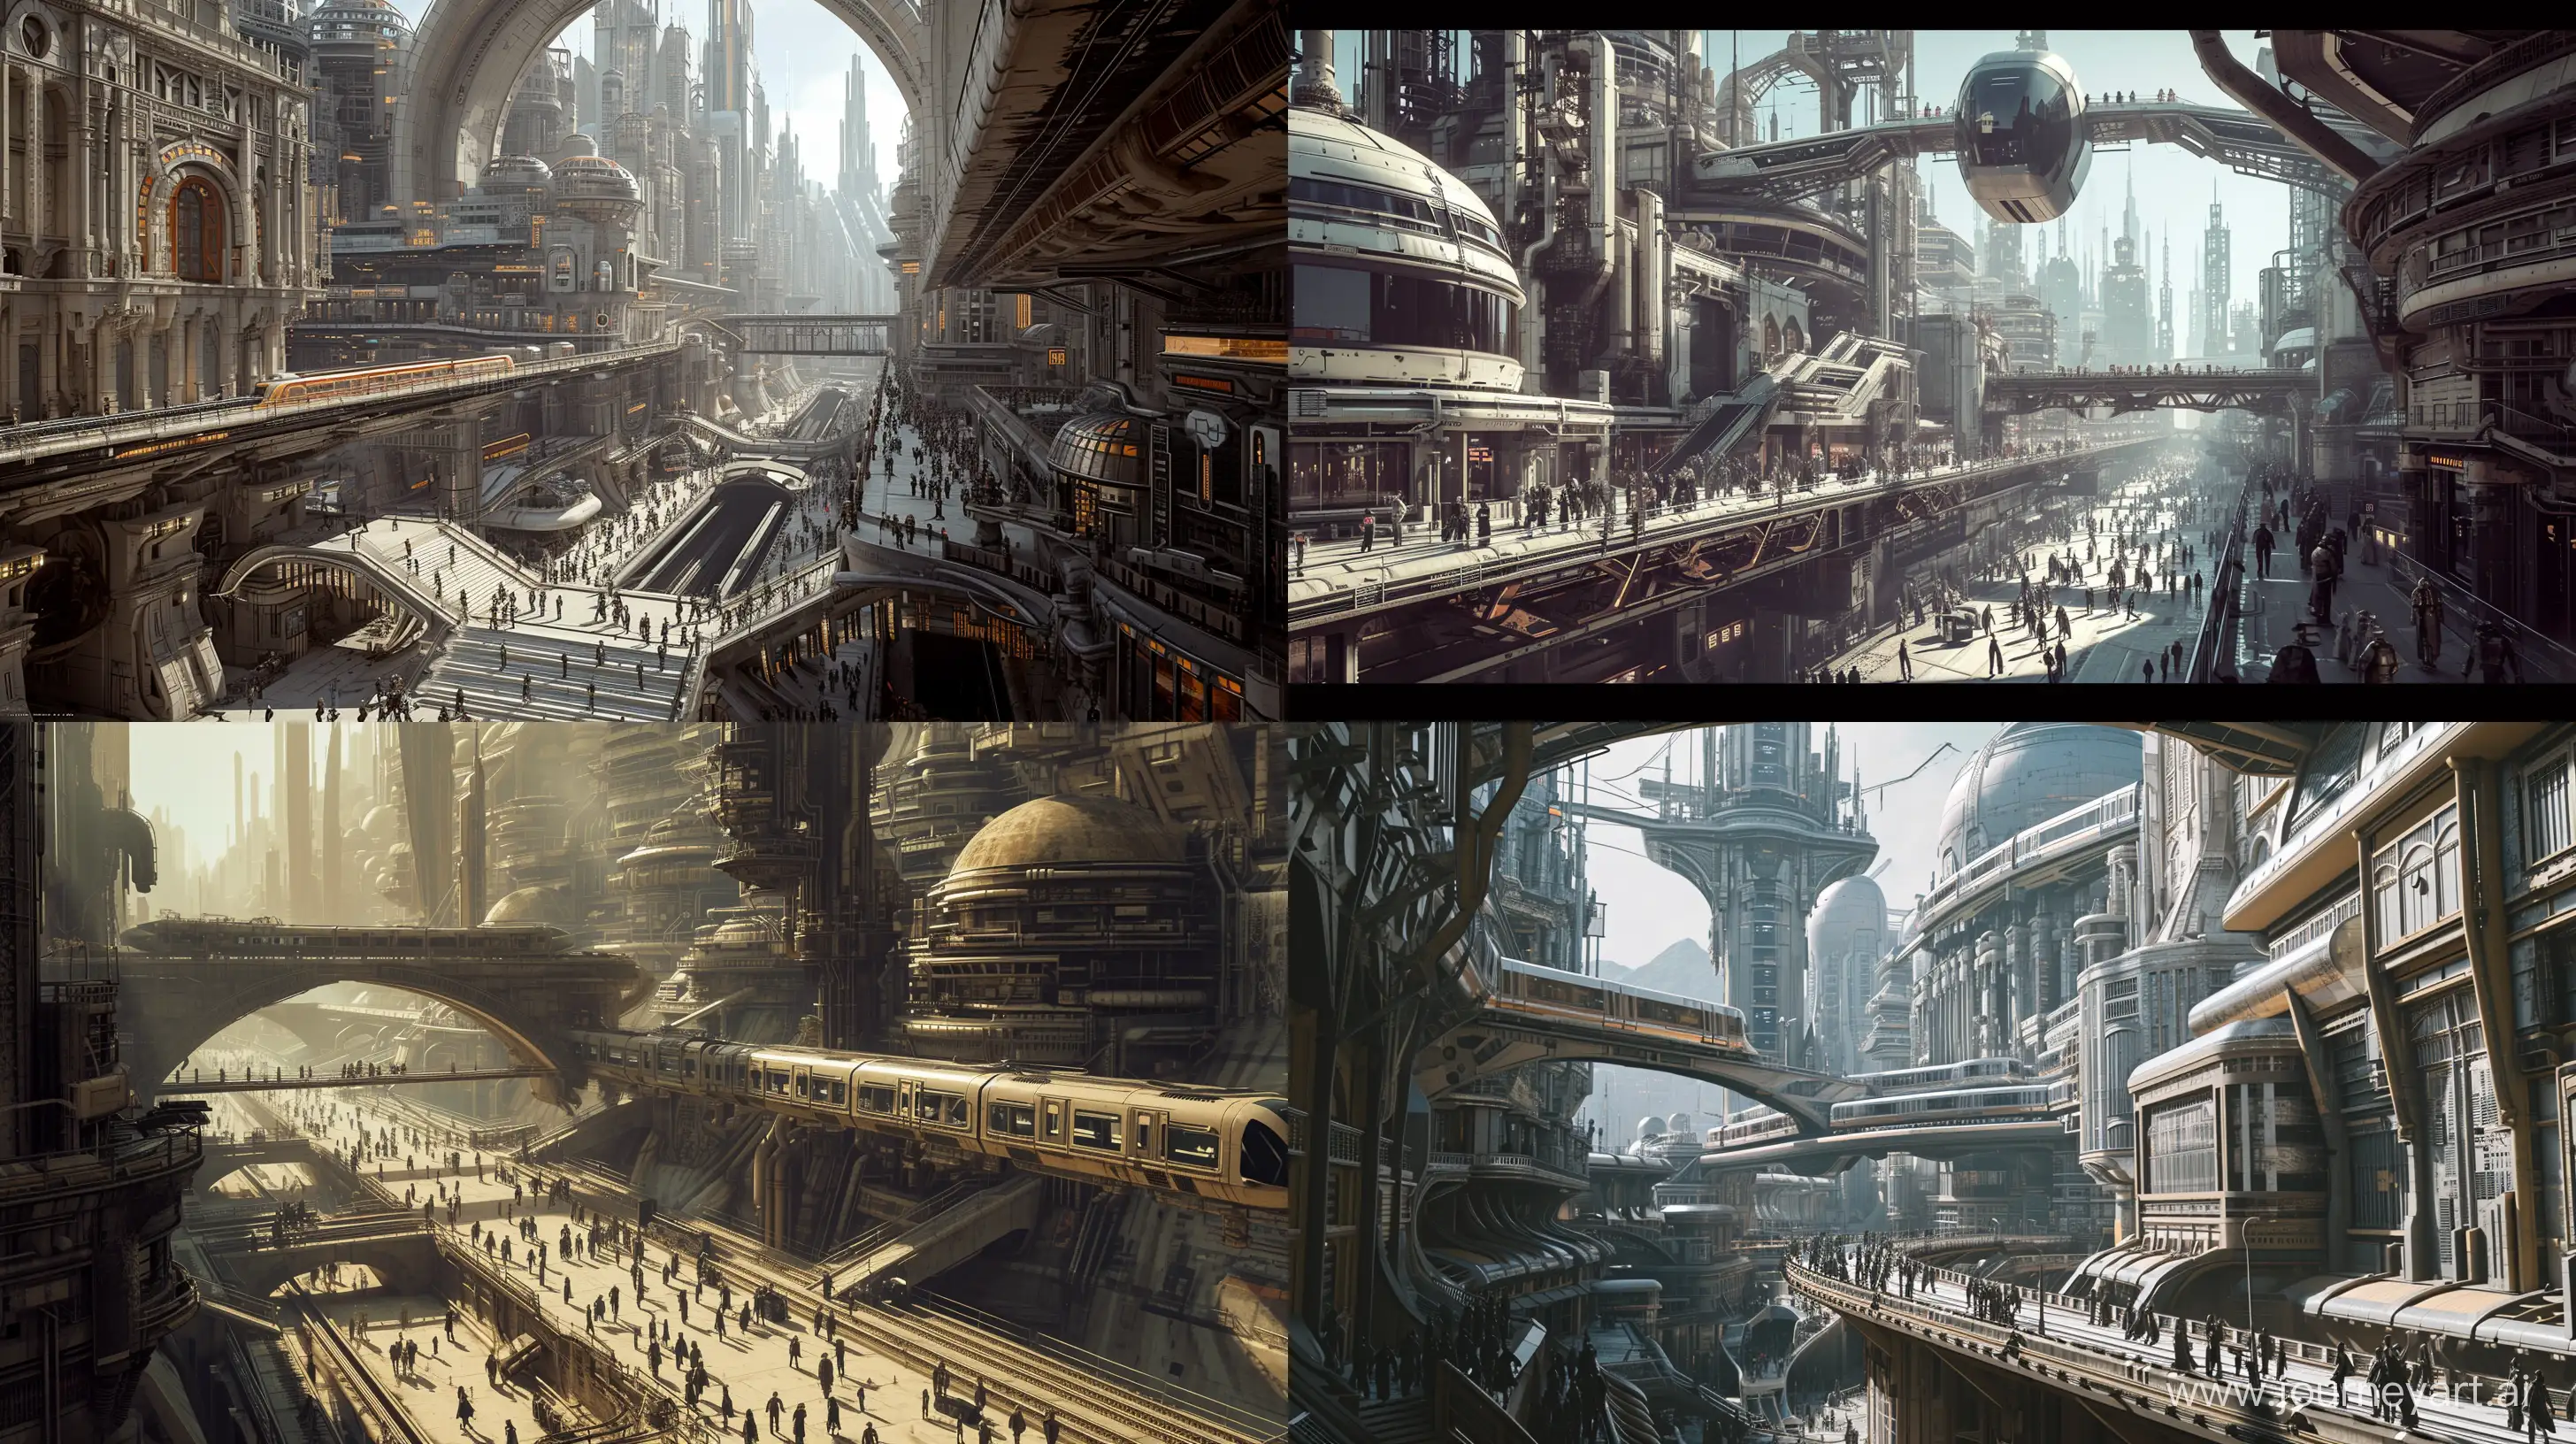 Futuristic-Neo-Babylon-Cyberpunk-Metropolis-with-HyperDetailed-Architecture